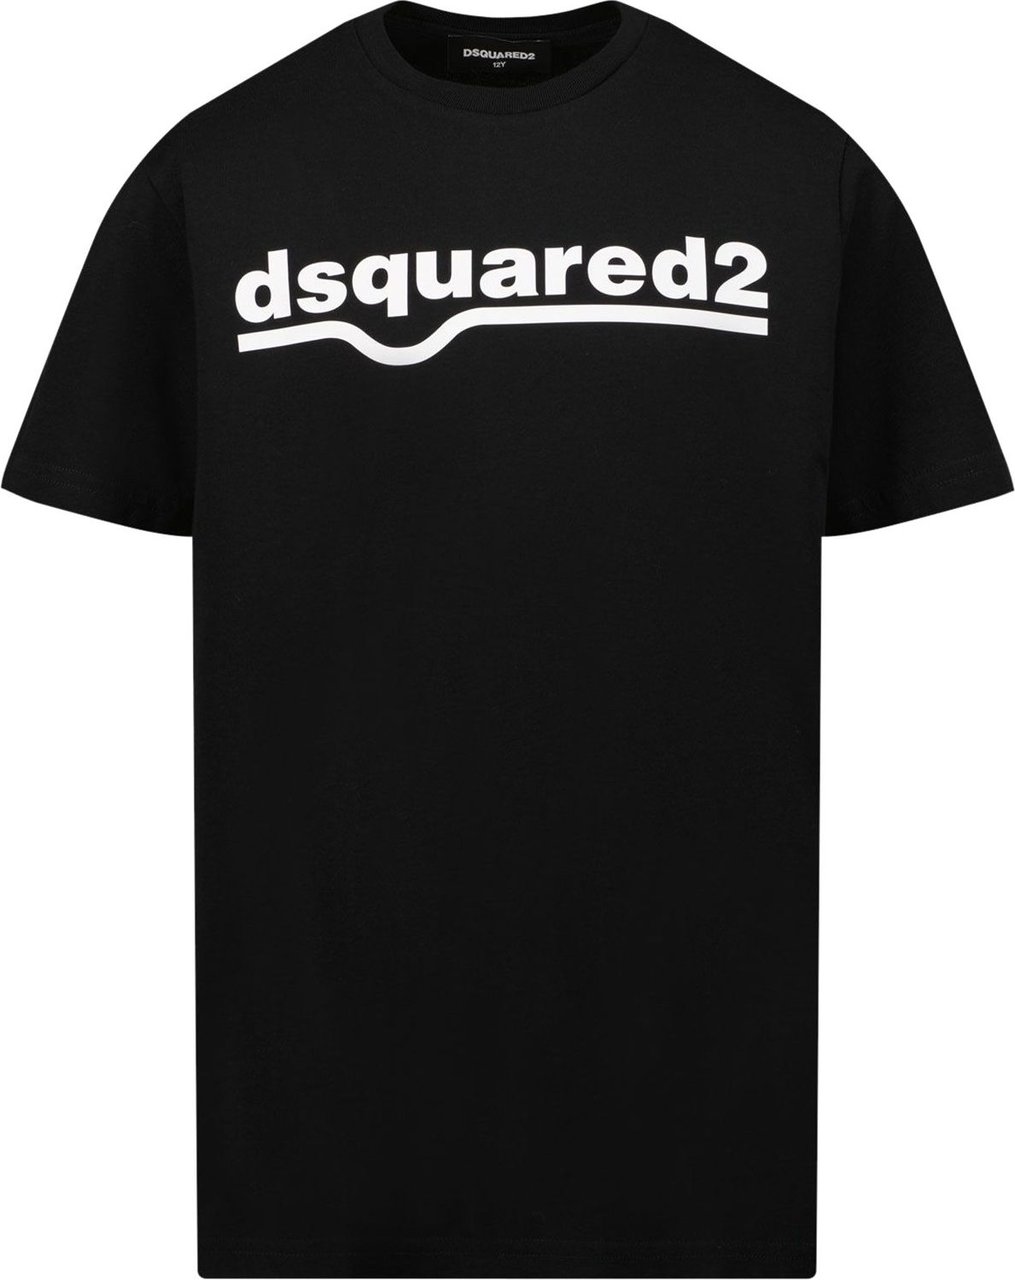 Dsquared2 Dsquared2 DQ0513 kinder t-shirt zwart Zwart